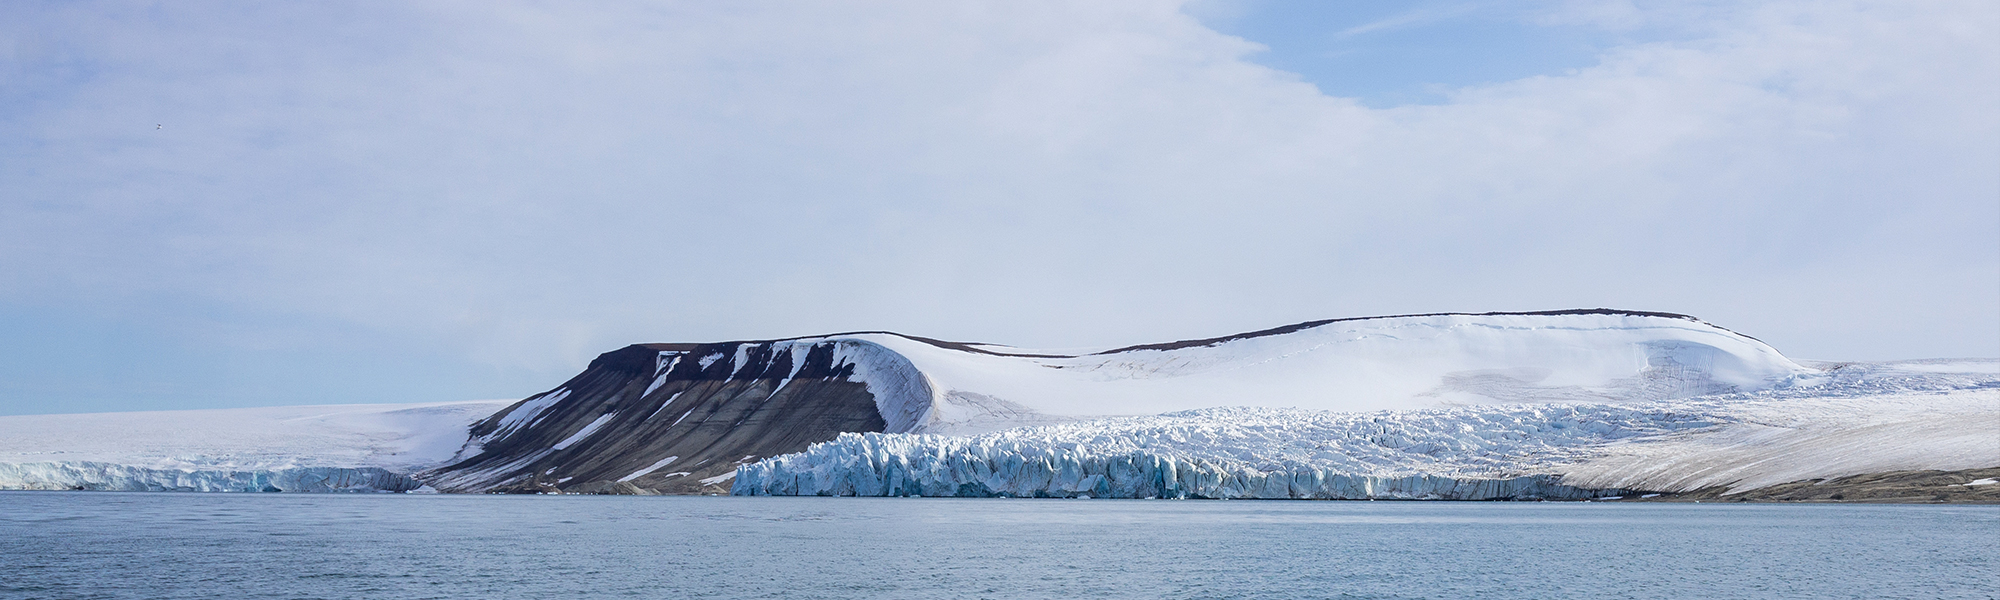 Croisière Spitzberg / Svalbard  © Gwennaelle Wit